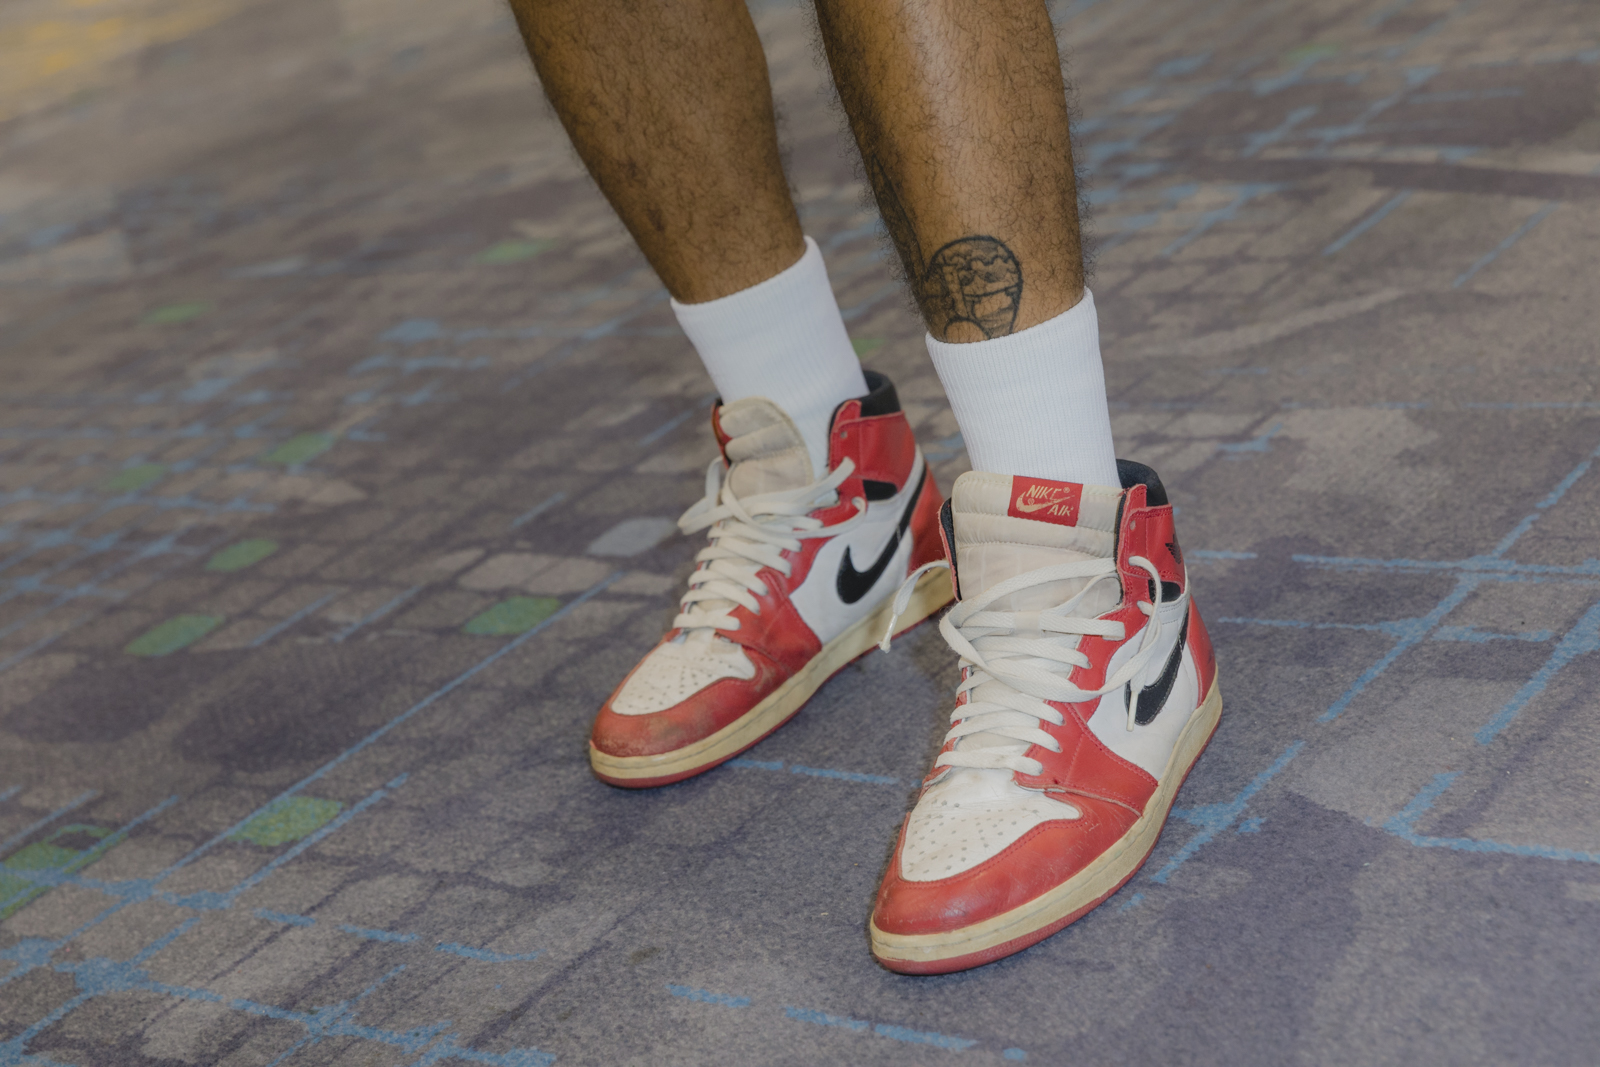 ComplexCon Chicago Sneakers Air Jordan 1 OG